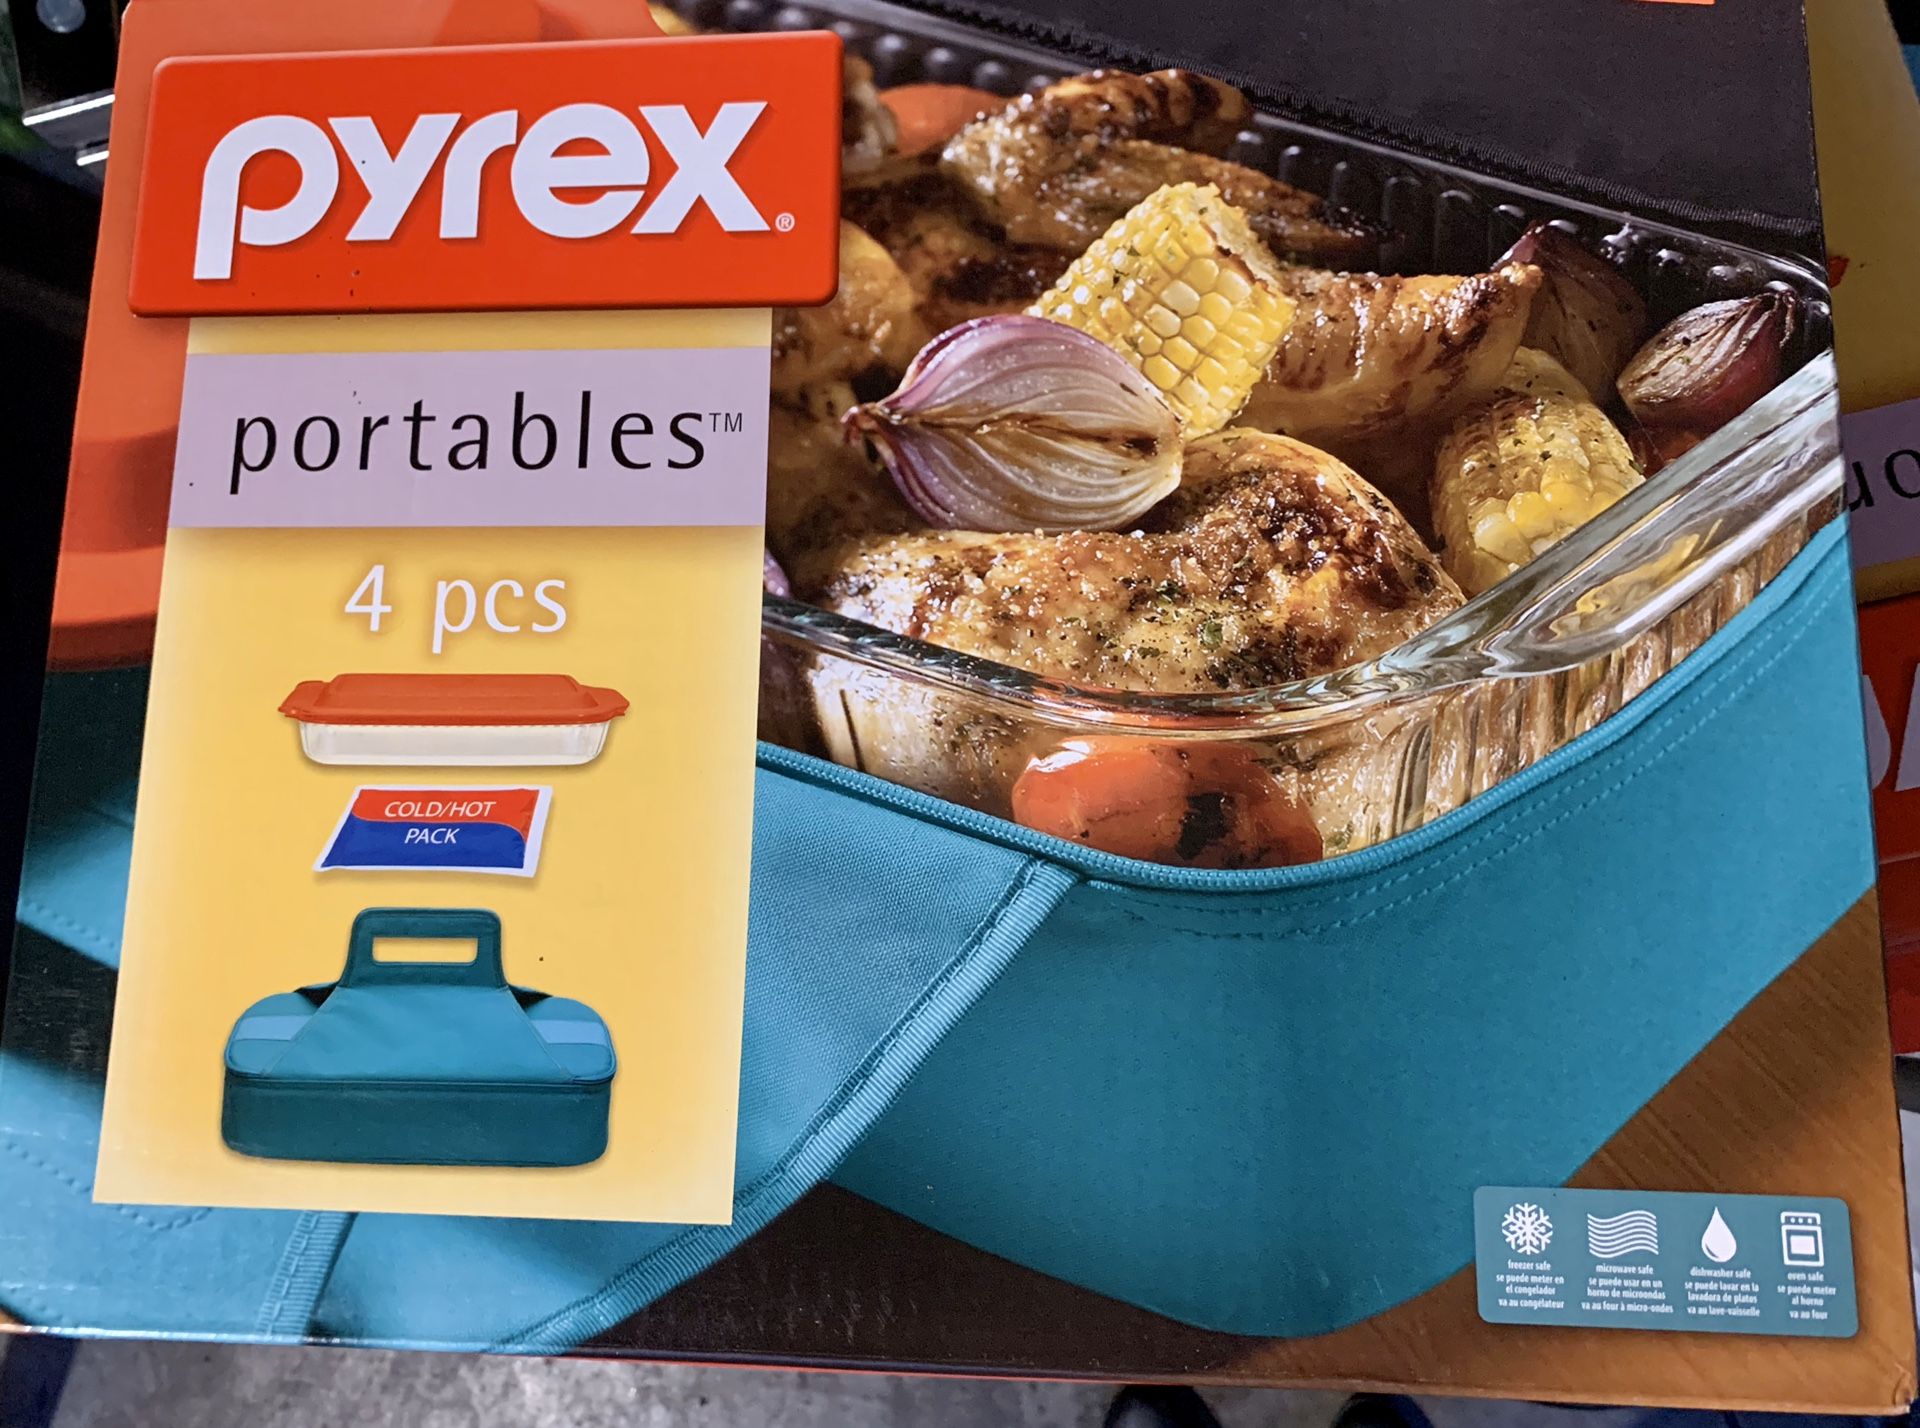 Pyrex: portables - 4 pc set. BRAND-NEW in box!